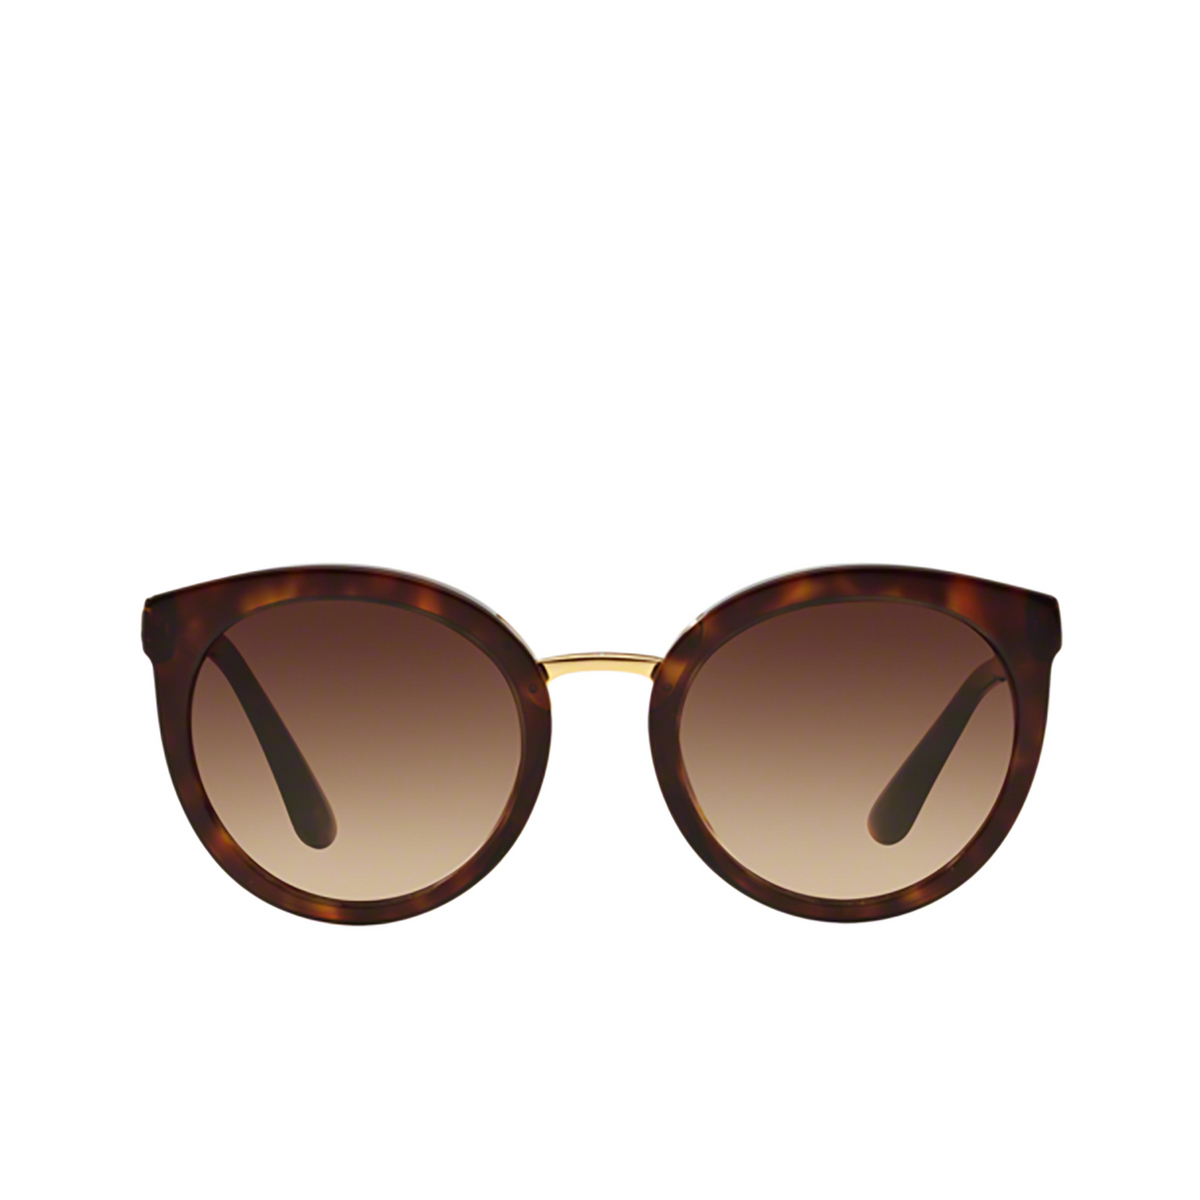 Dolce & Gabbana® Round Sunglasses: DG4268 color Havana 502/13 - 1/3.